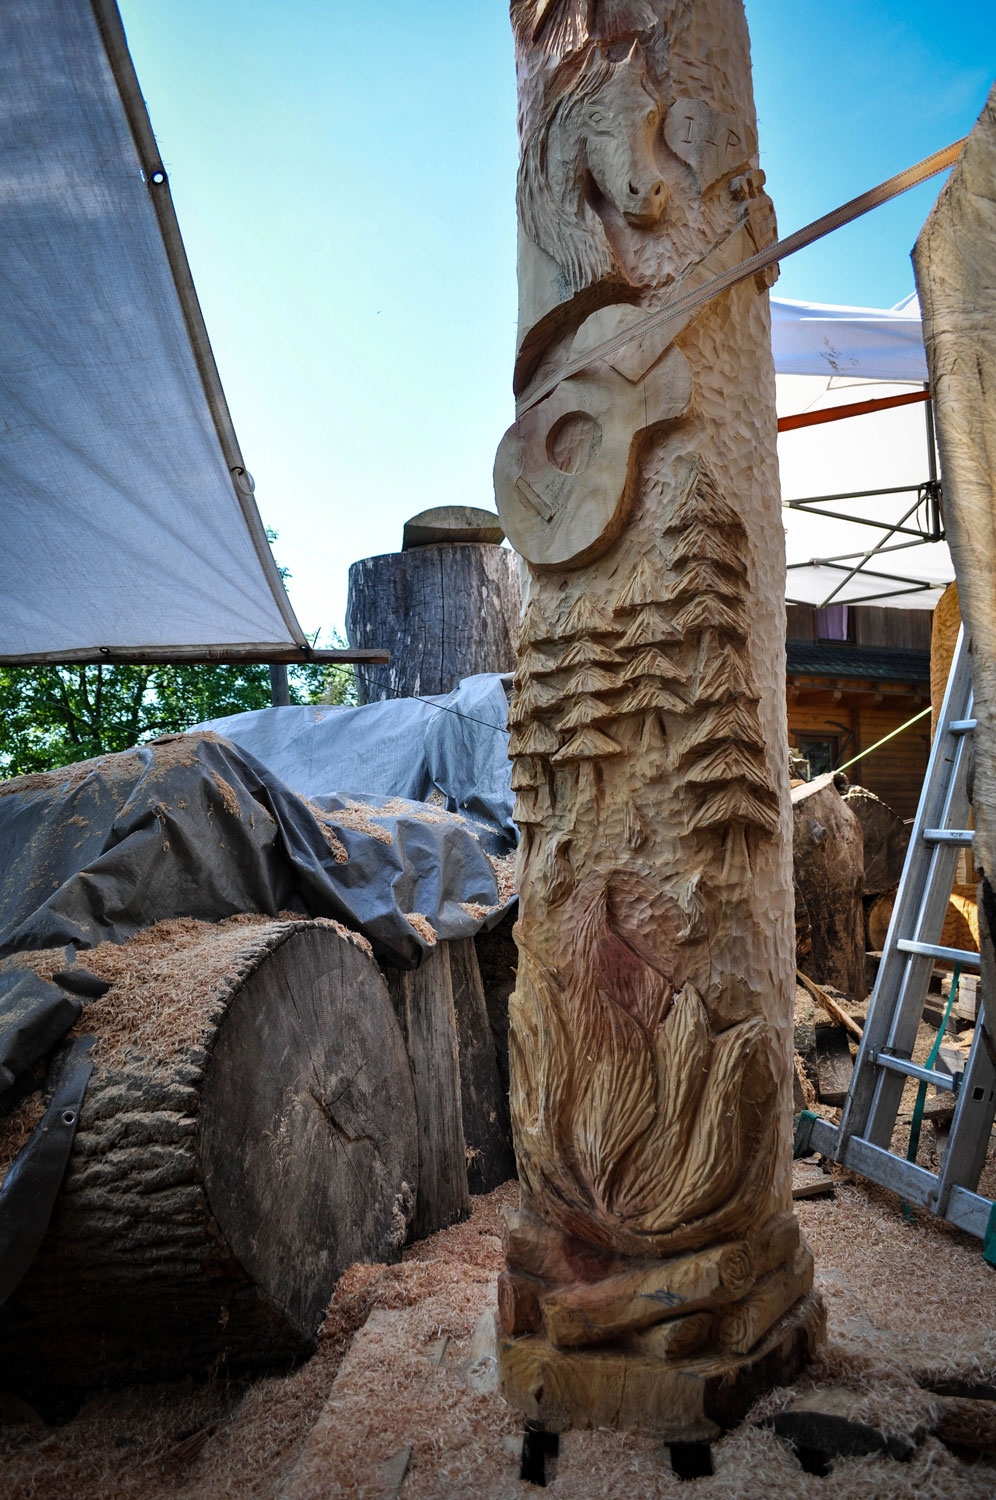 drevorezba-vyrezavani-carving-wood-drevo-socha-totem_3m-radekzdrazil-20210811-05